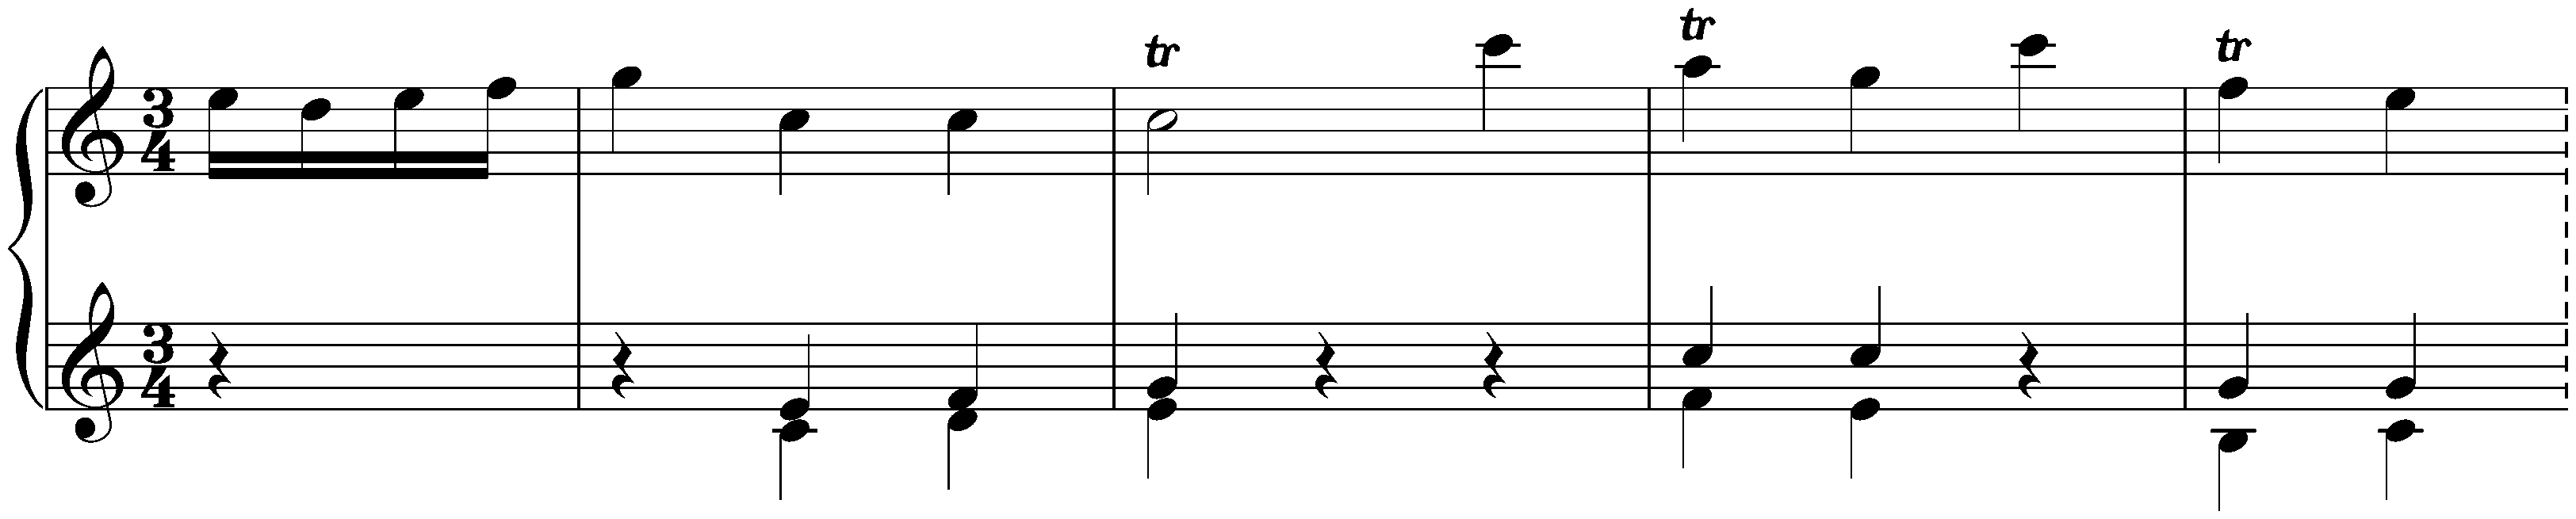 Sonata in C major, Hob. XVI:3; 3. Menuet – Trio